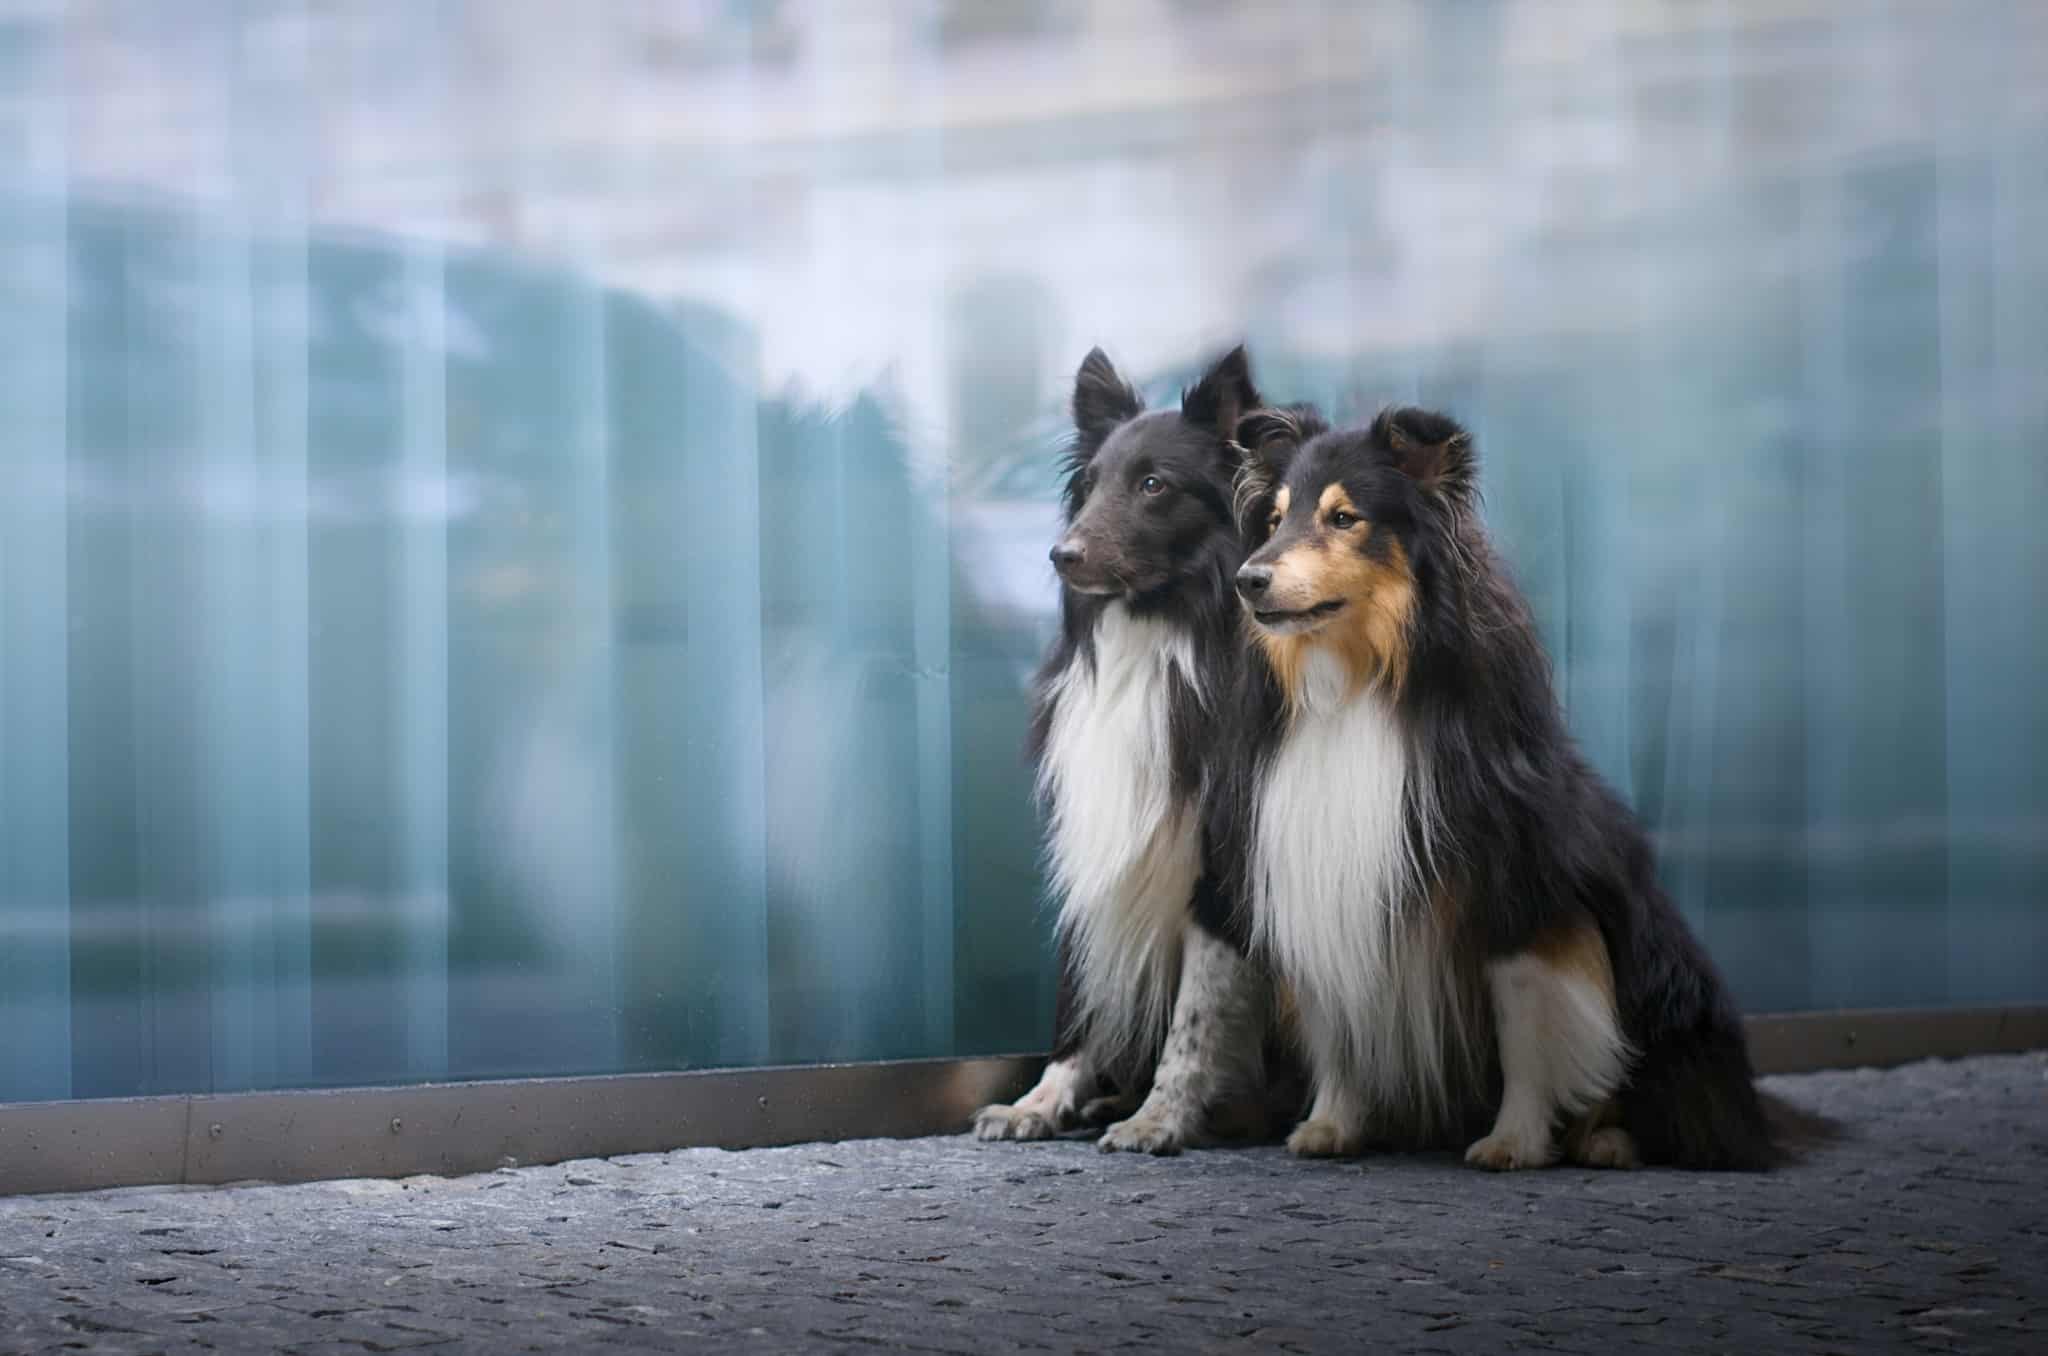 Míša Malá and Eliška Hrůzová agree that dog photography is not always easy